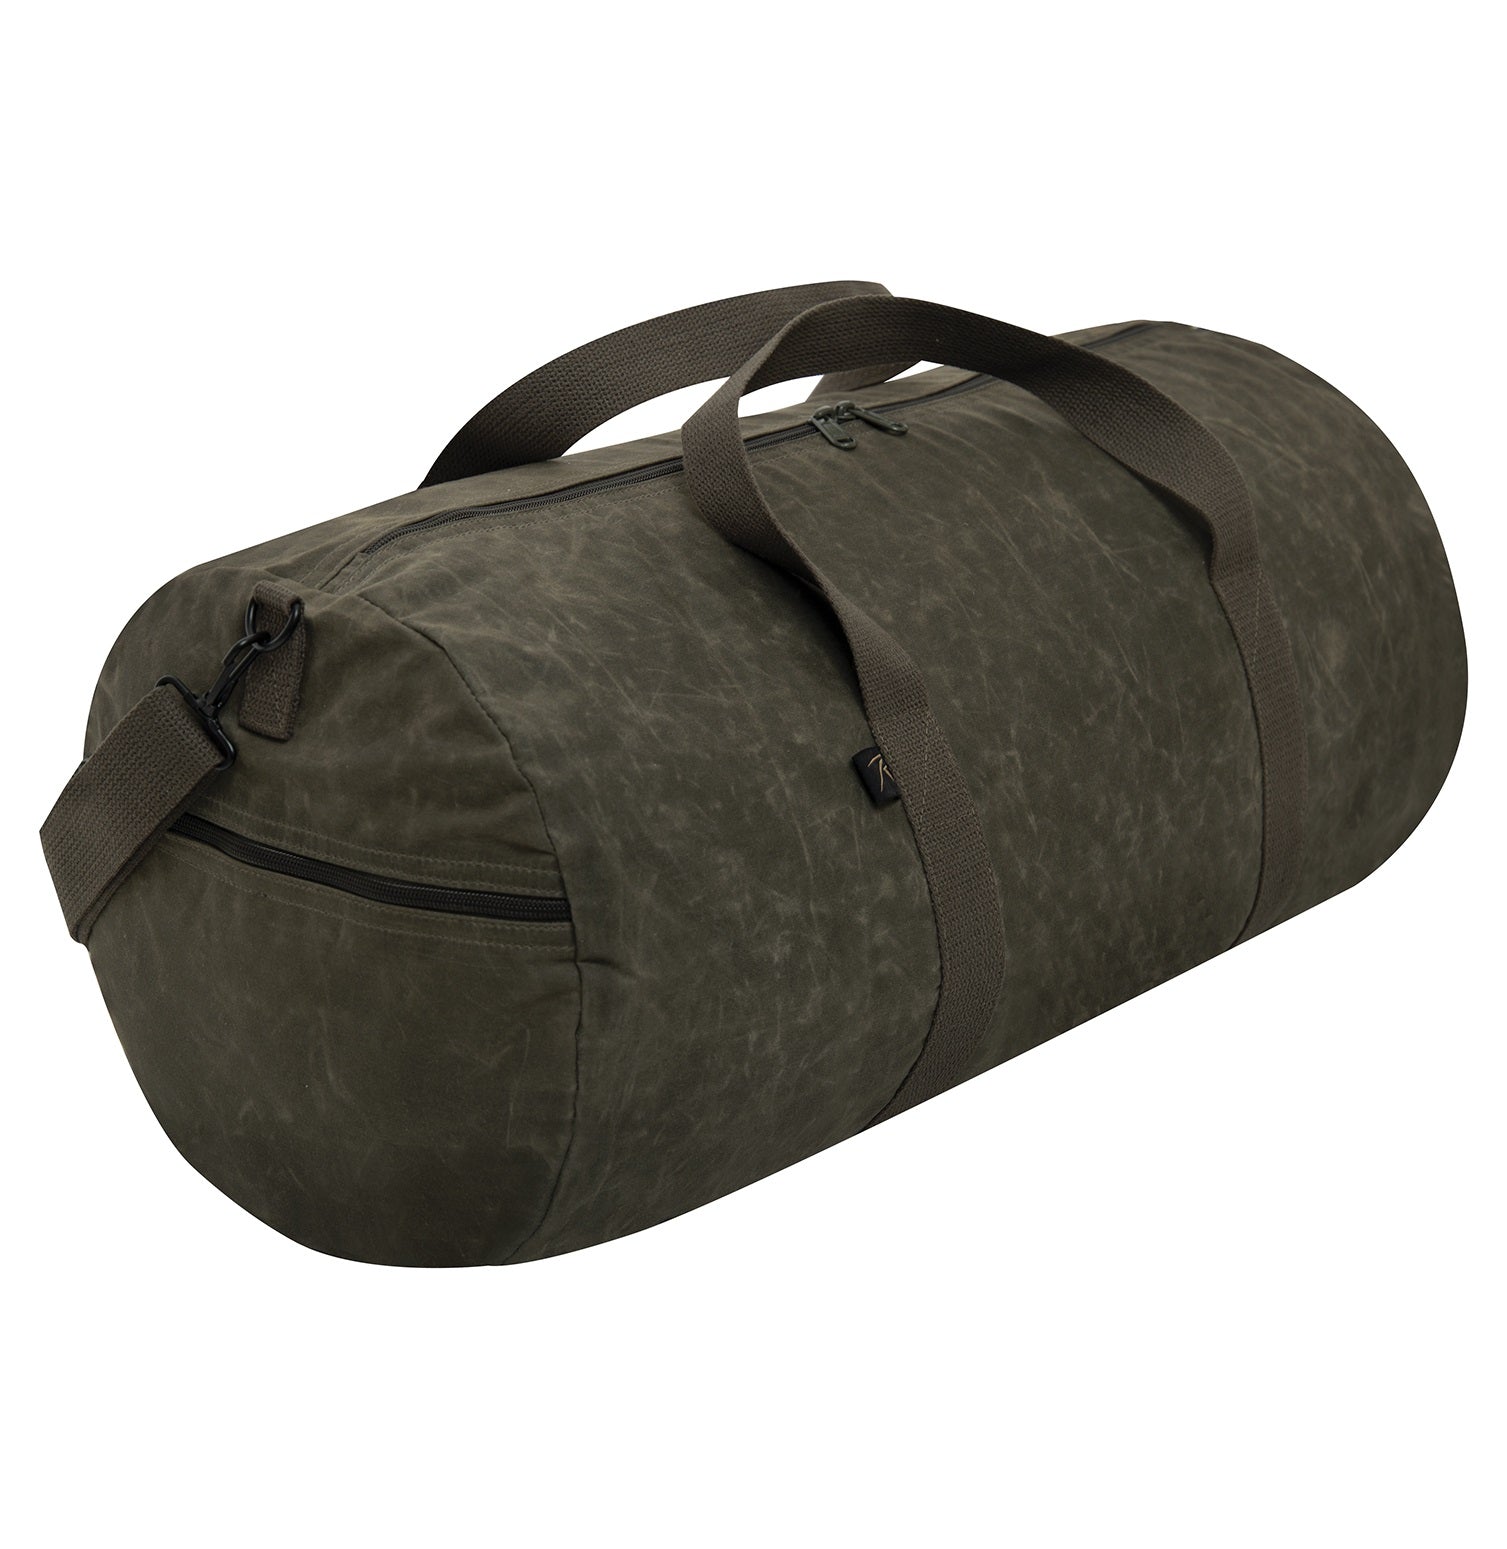 Rothco Waxed Canvas Shoulder Duffle Bag - 24 Inch Olive Drab